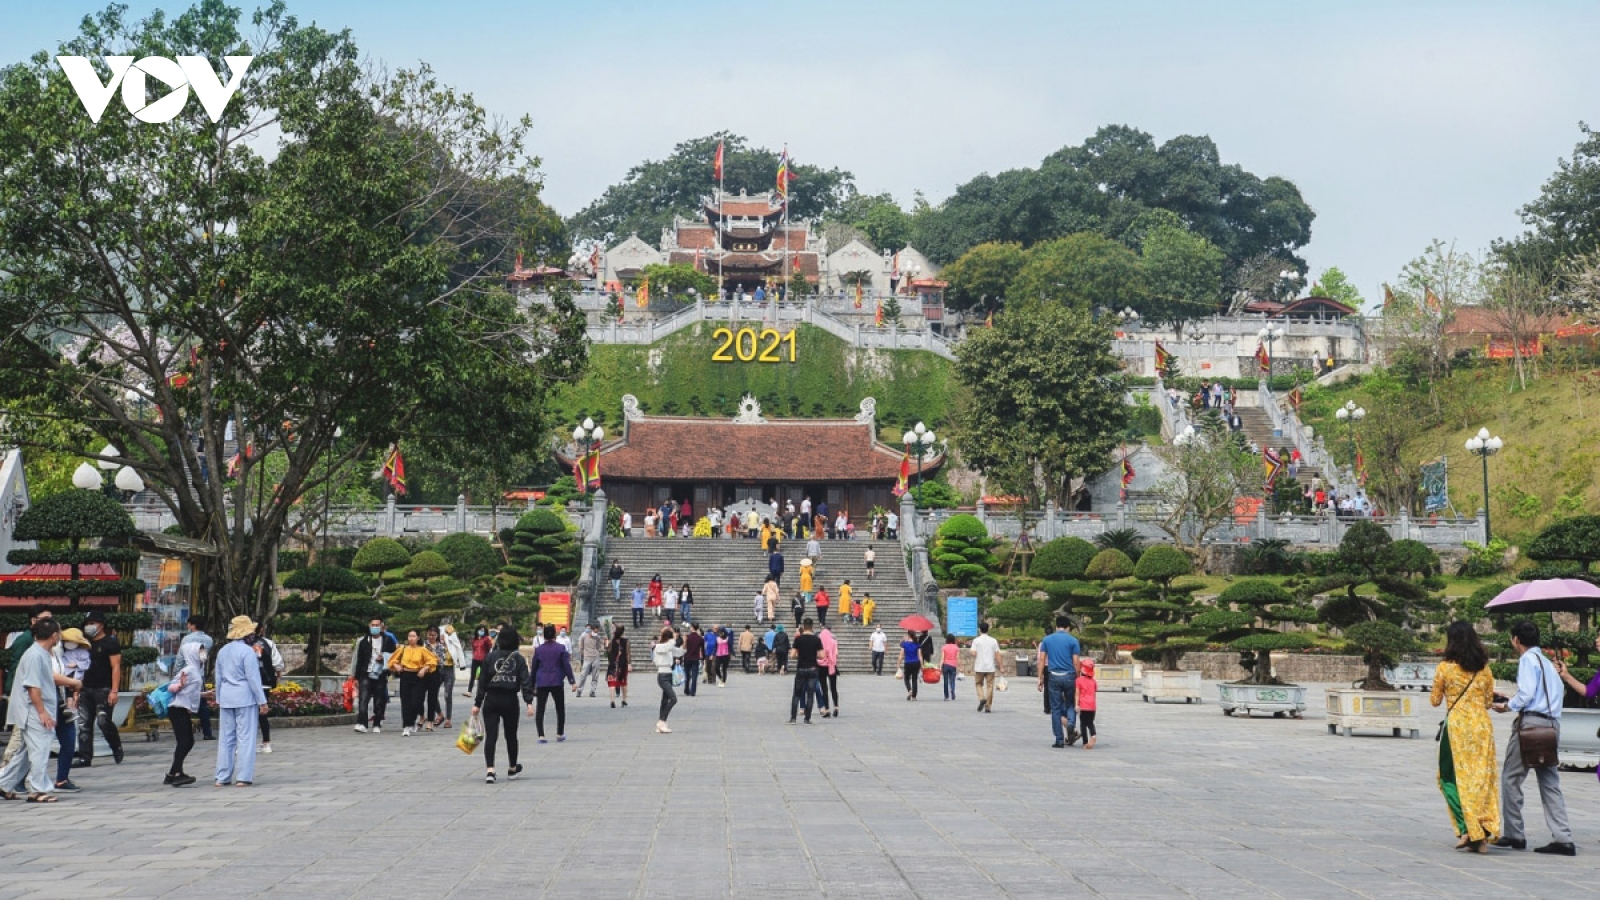 Cua Ong Temple Festival draws visitors in post-COVID-19 period